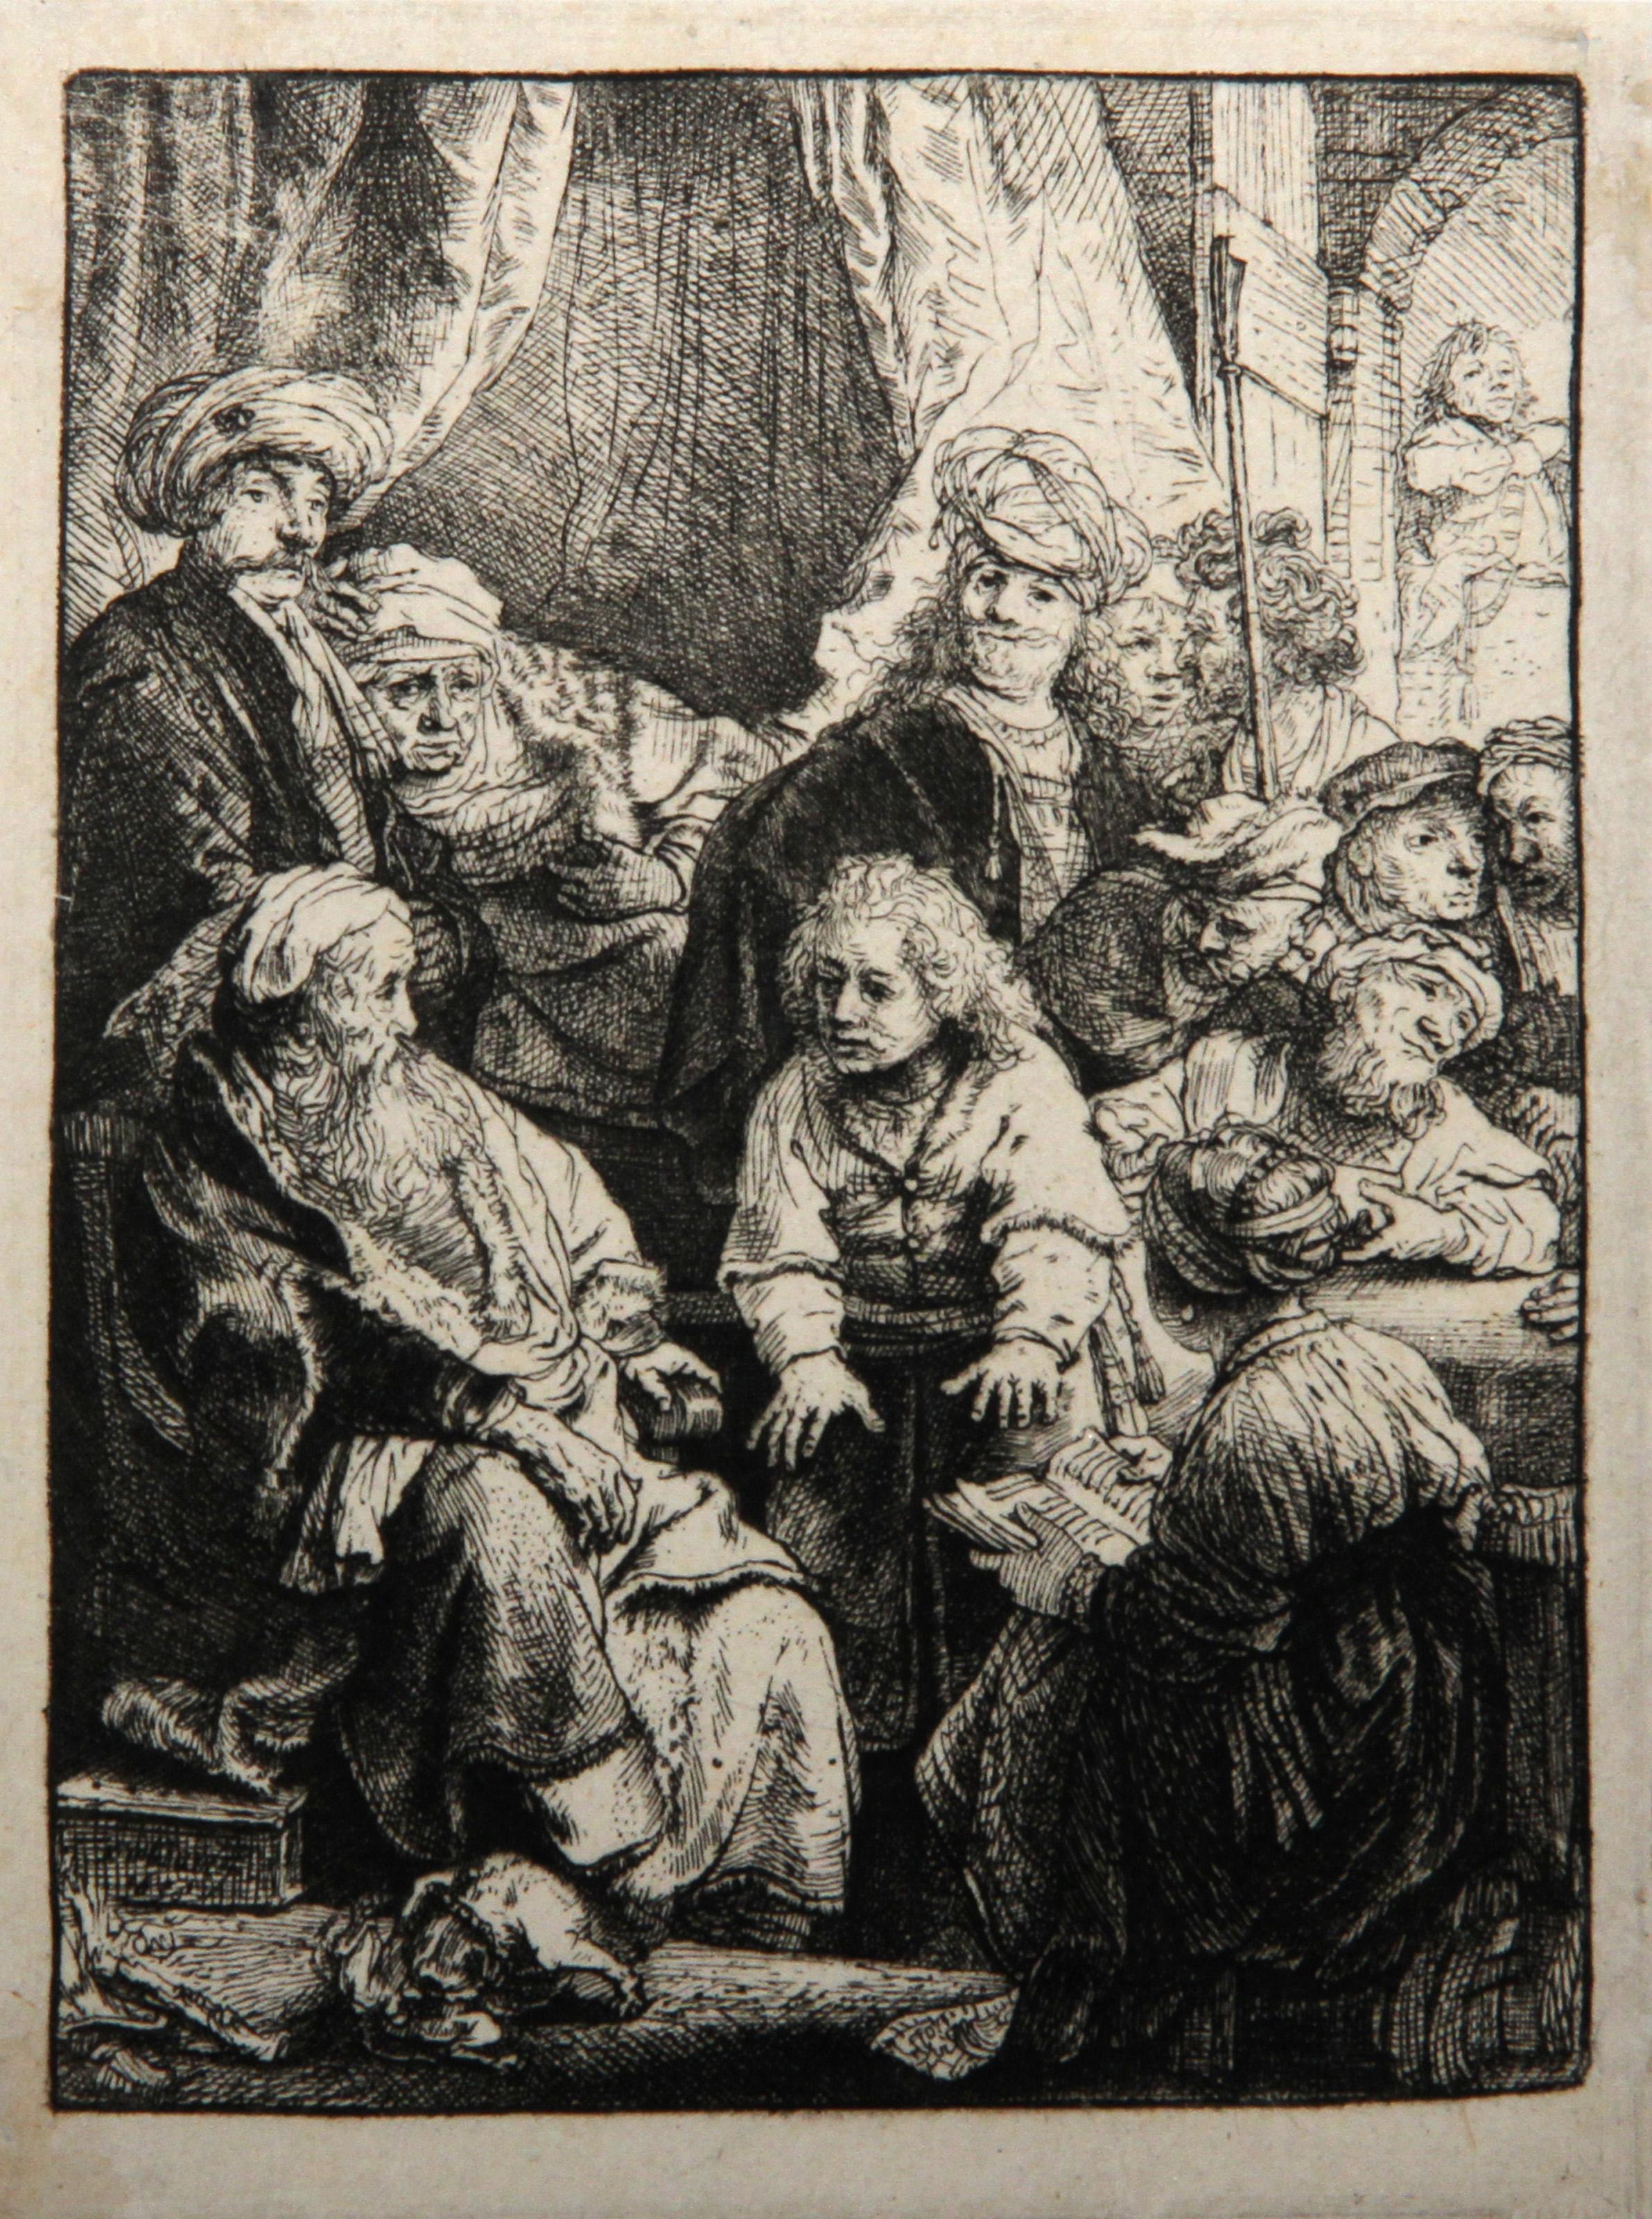 Artist: Rembrandt van Rijn, After by Amand Durand, Dutch (1606 - 1669) -  Joseph Racontant Ses Songes (B37), Year: 1878 (of original 1638), Medium: Heliogravure, Size: 4.75  x 3.5 in. (12.07  x 8.89 cm), Printer: Amand Durand, Description: French